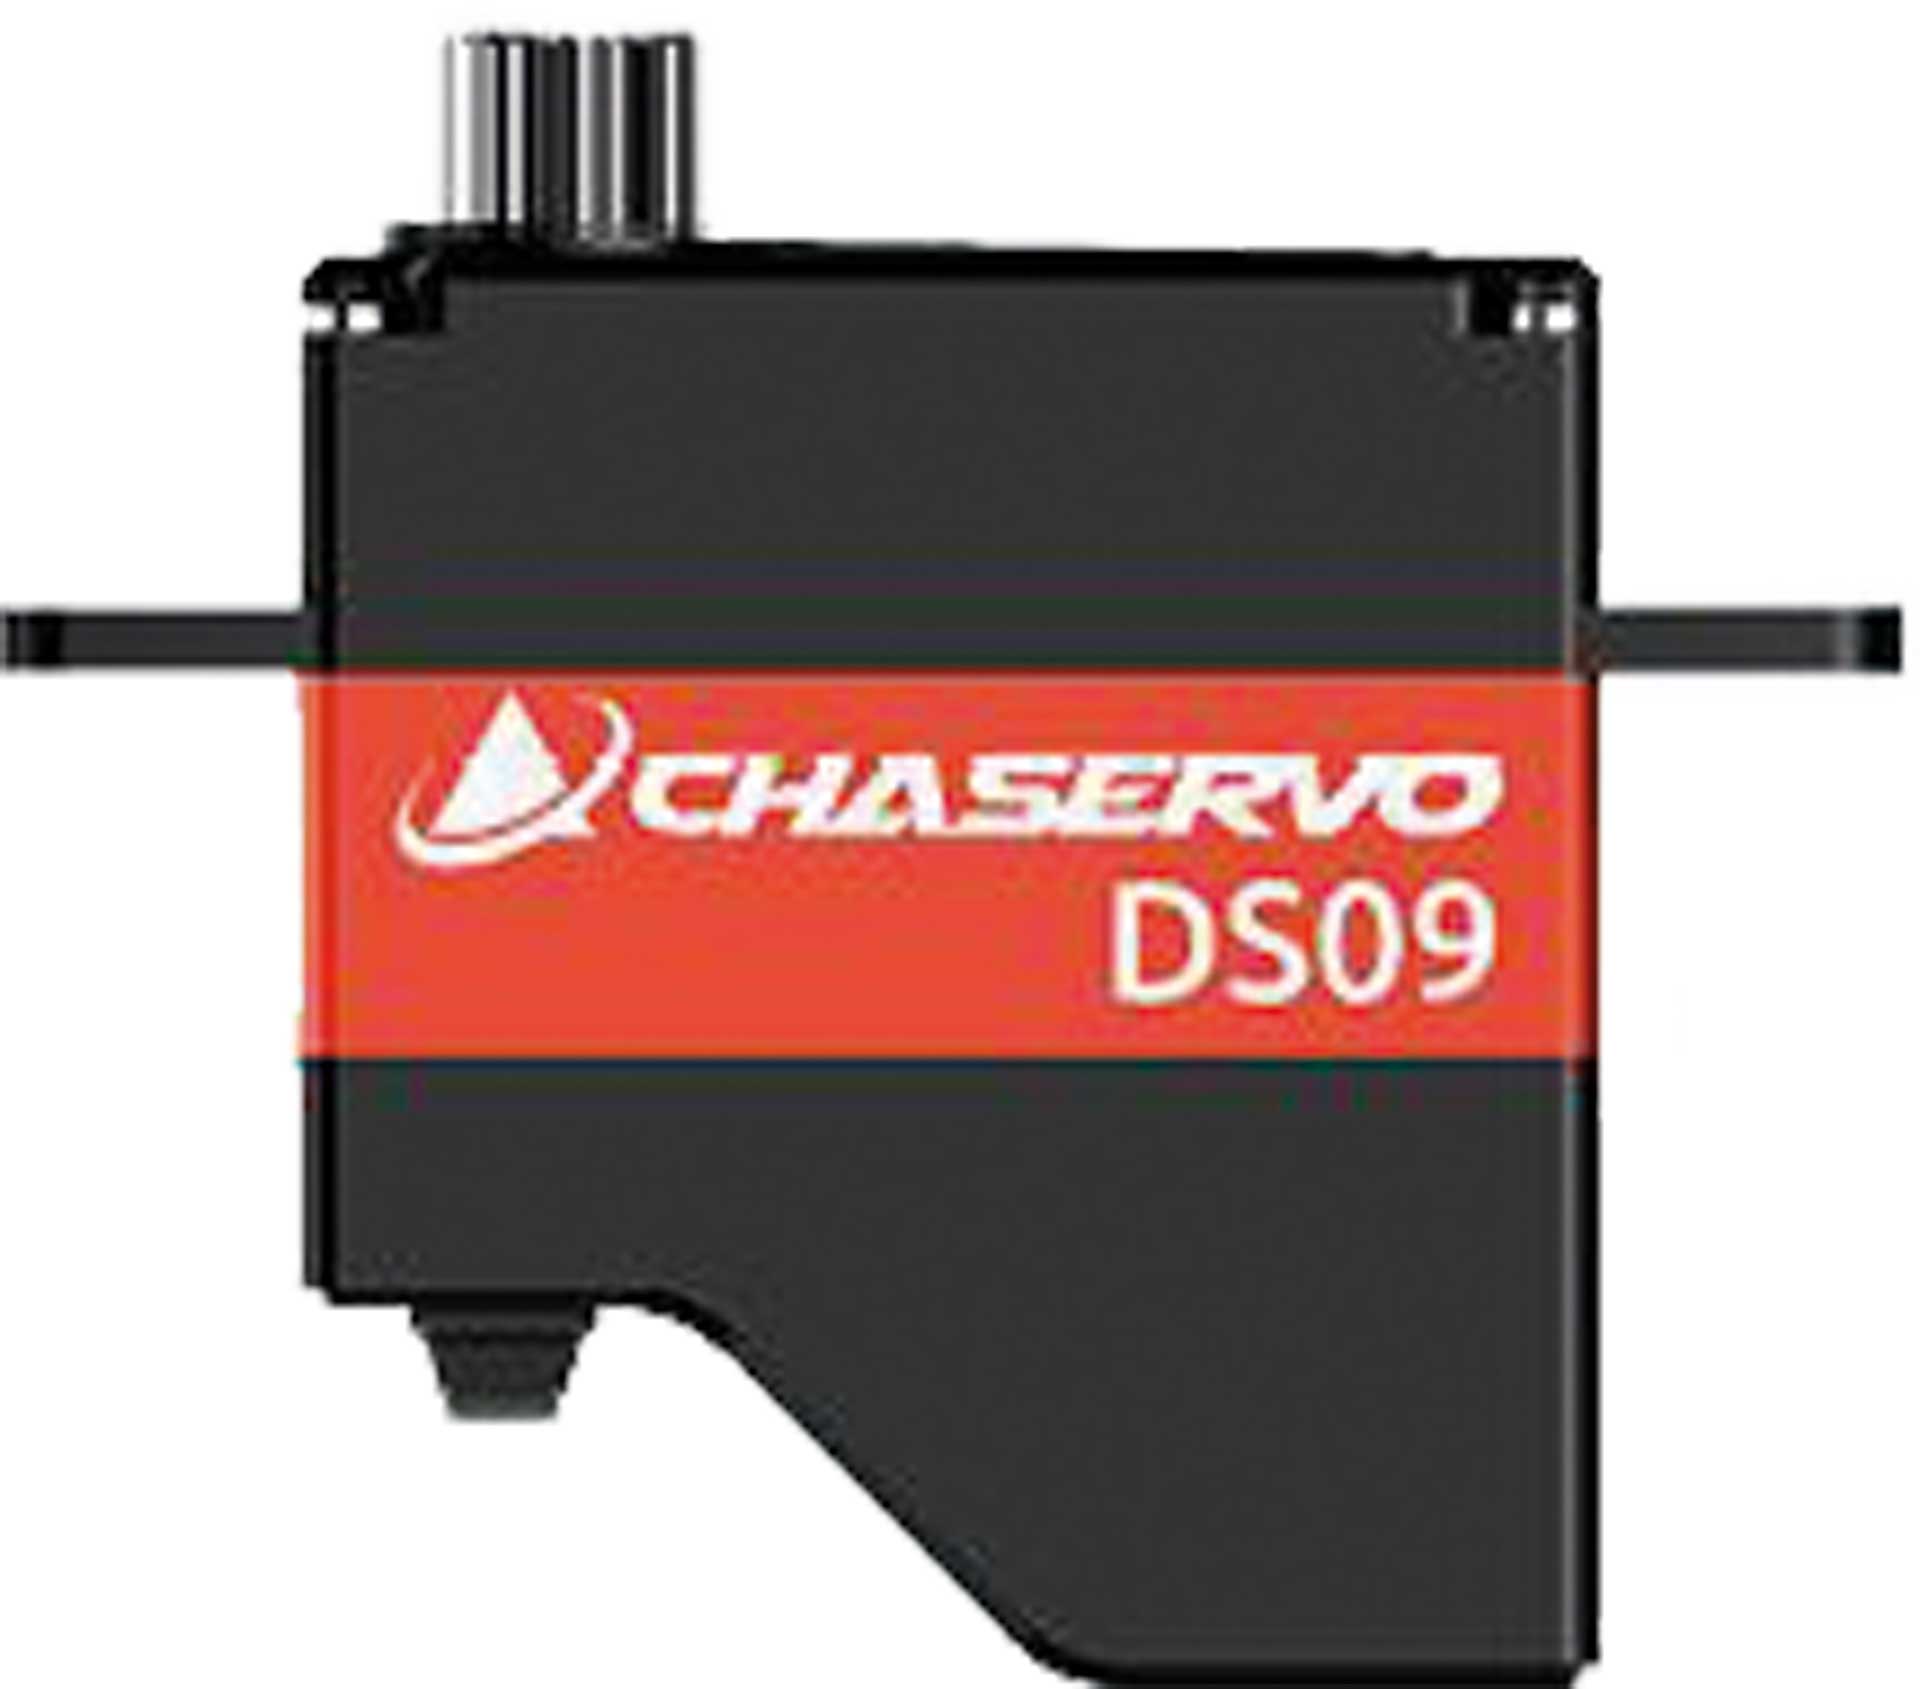 CHASERVO DS09 9mm HV Servo mit Befestigungs- pattes pour montage horizontal